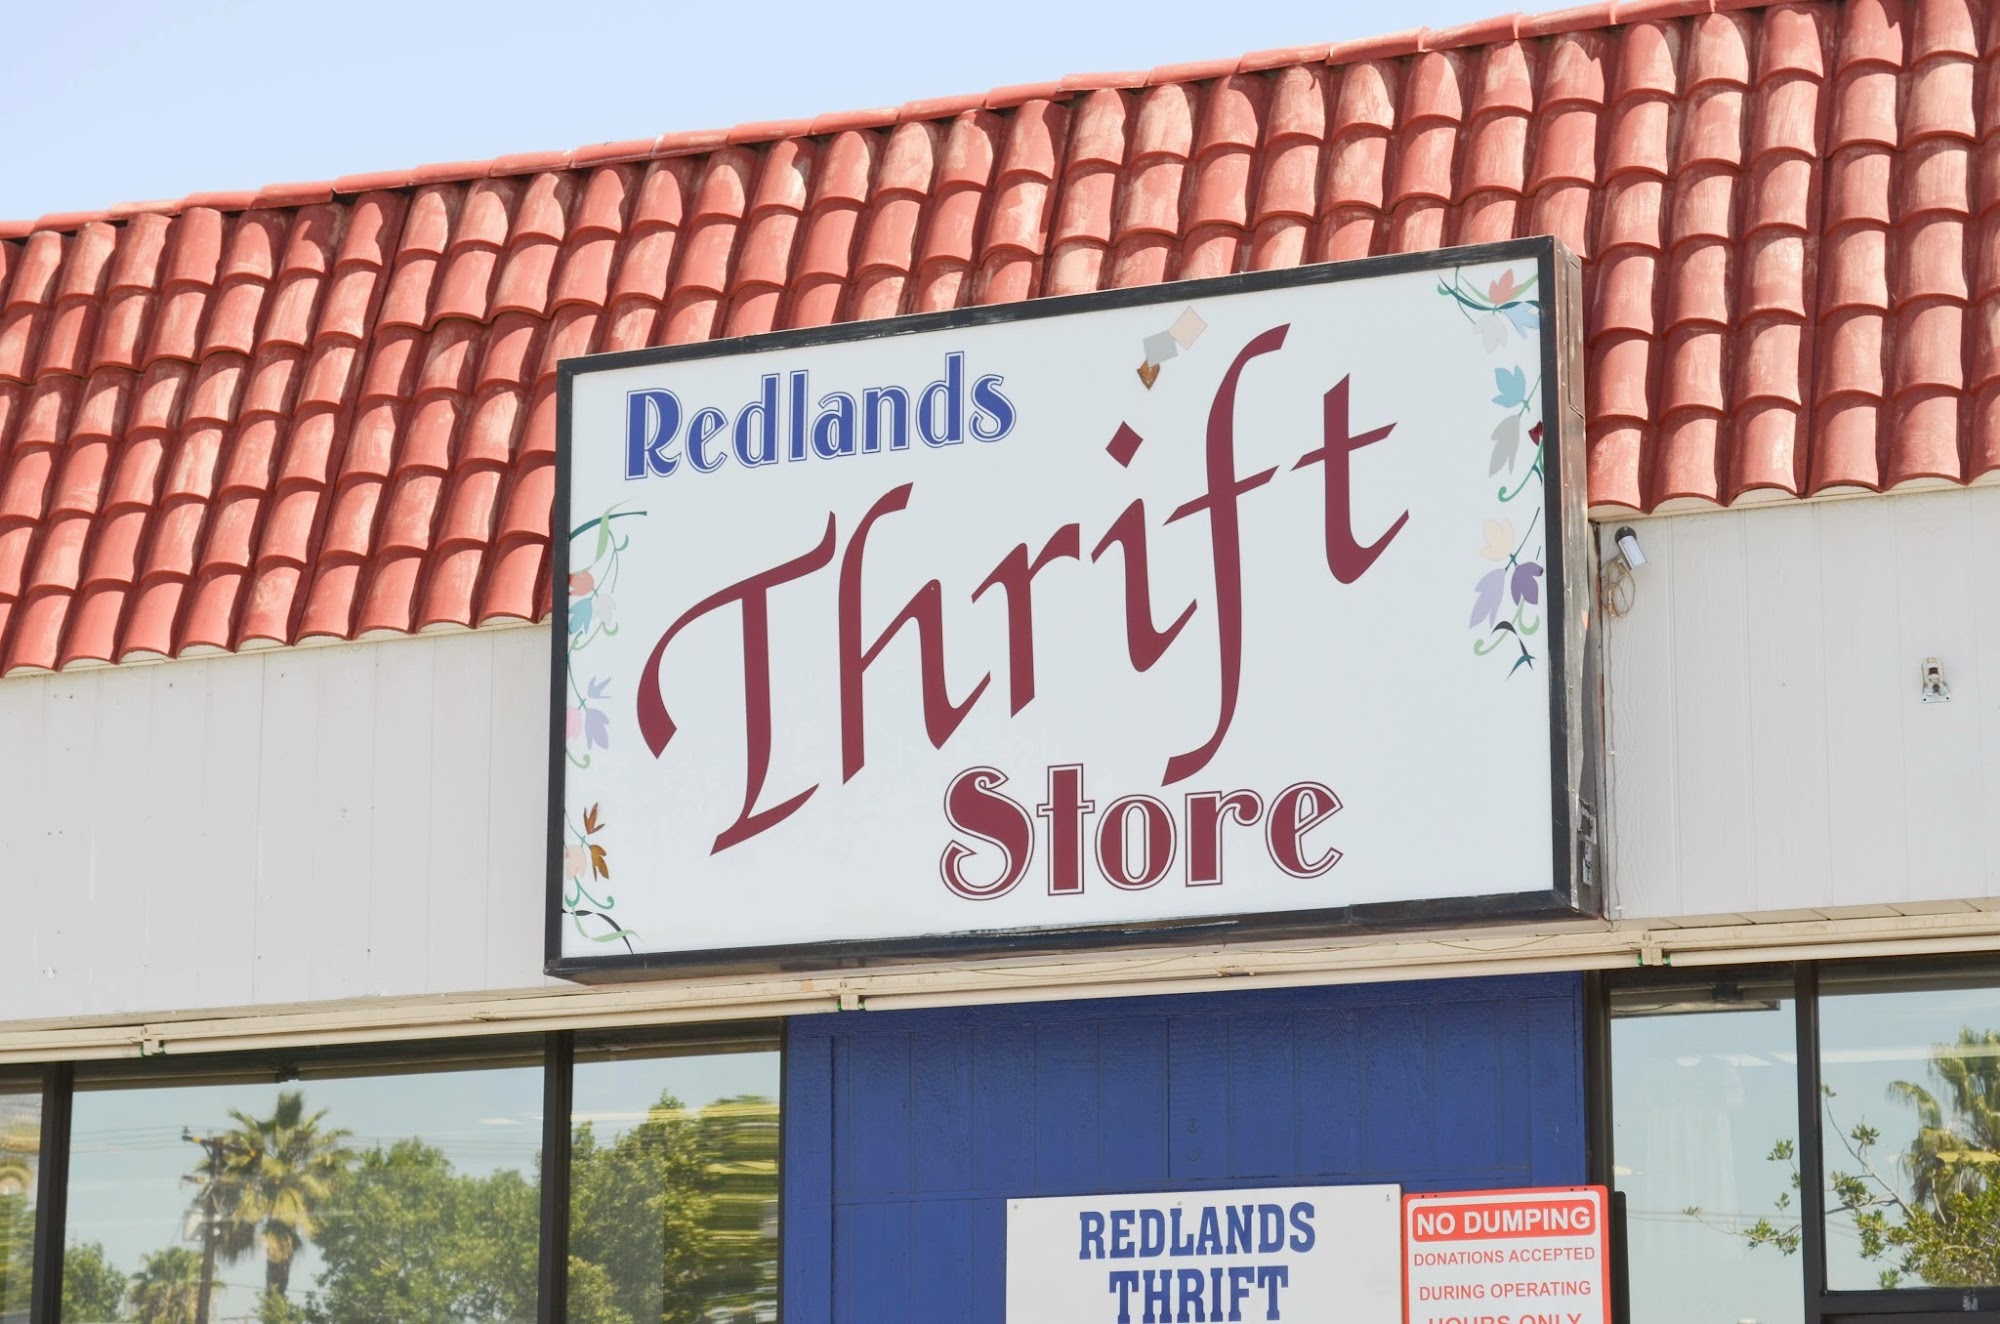 The Redlands Thrift Store